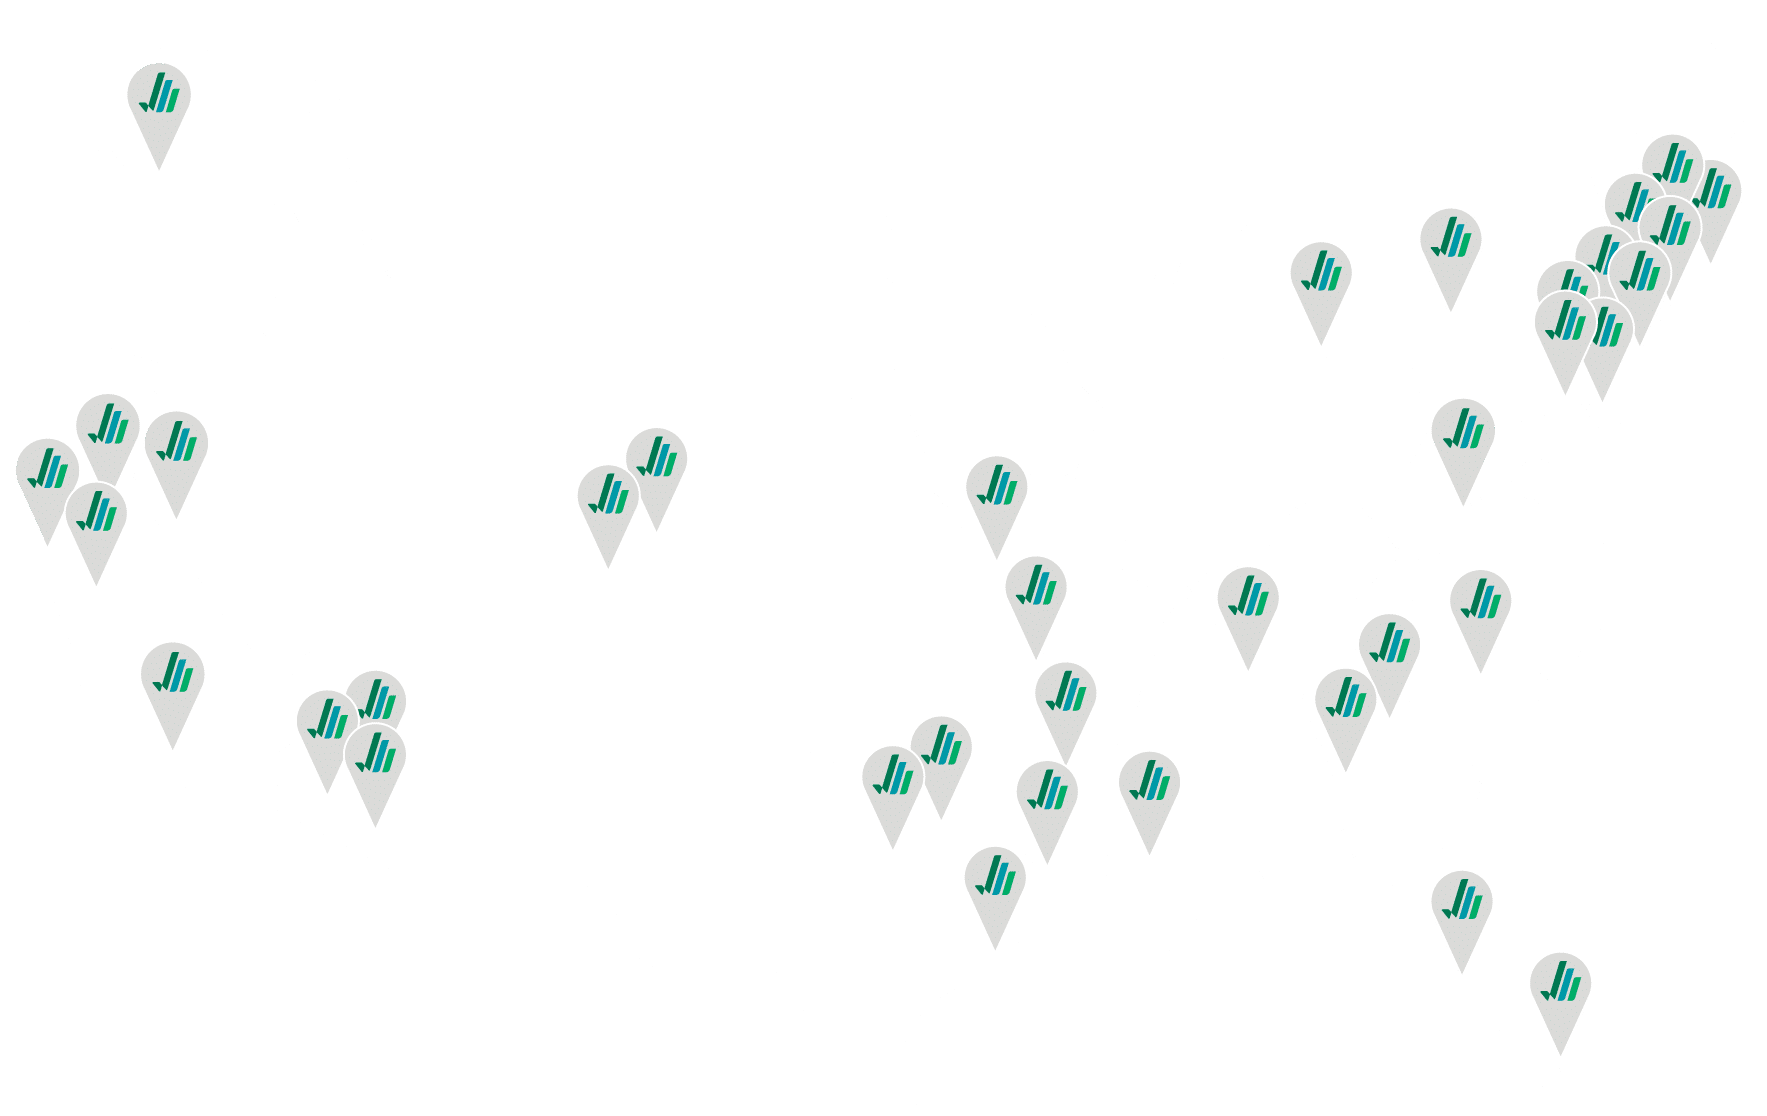 jencap locations nationwide